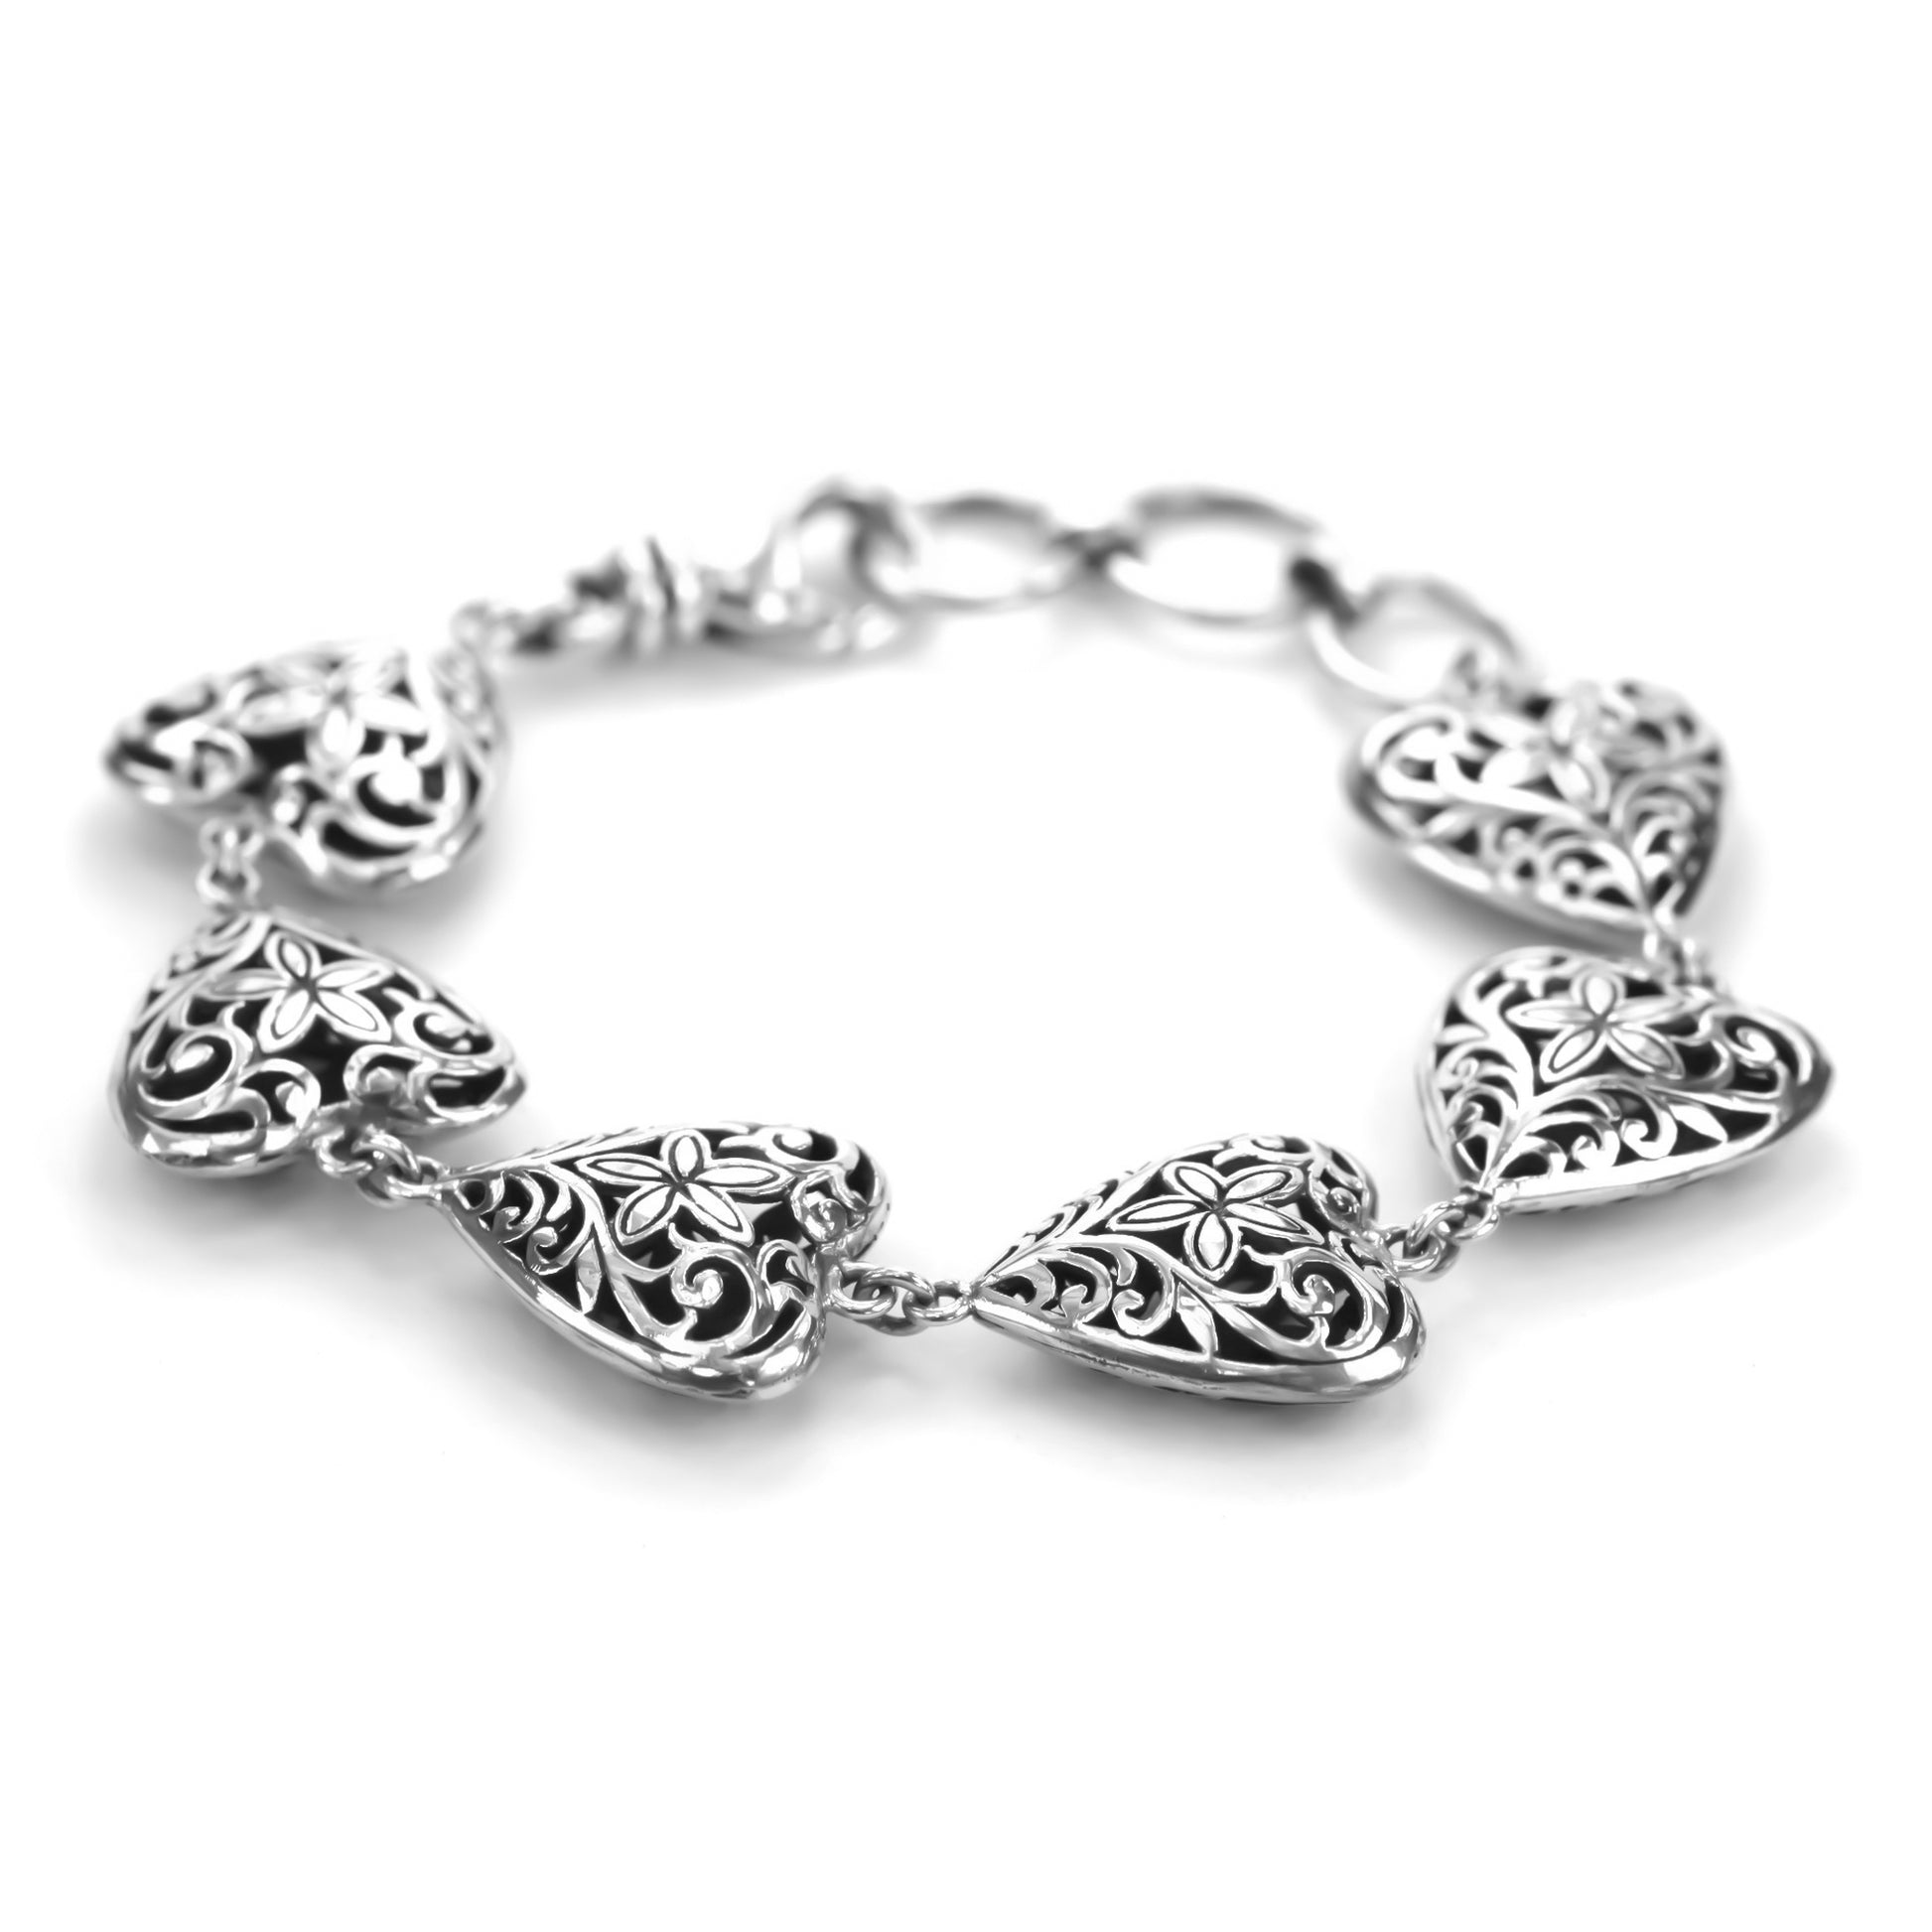 Silver bracelet with six ornate filigree heart stations.